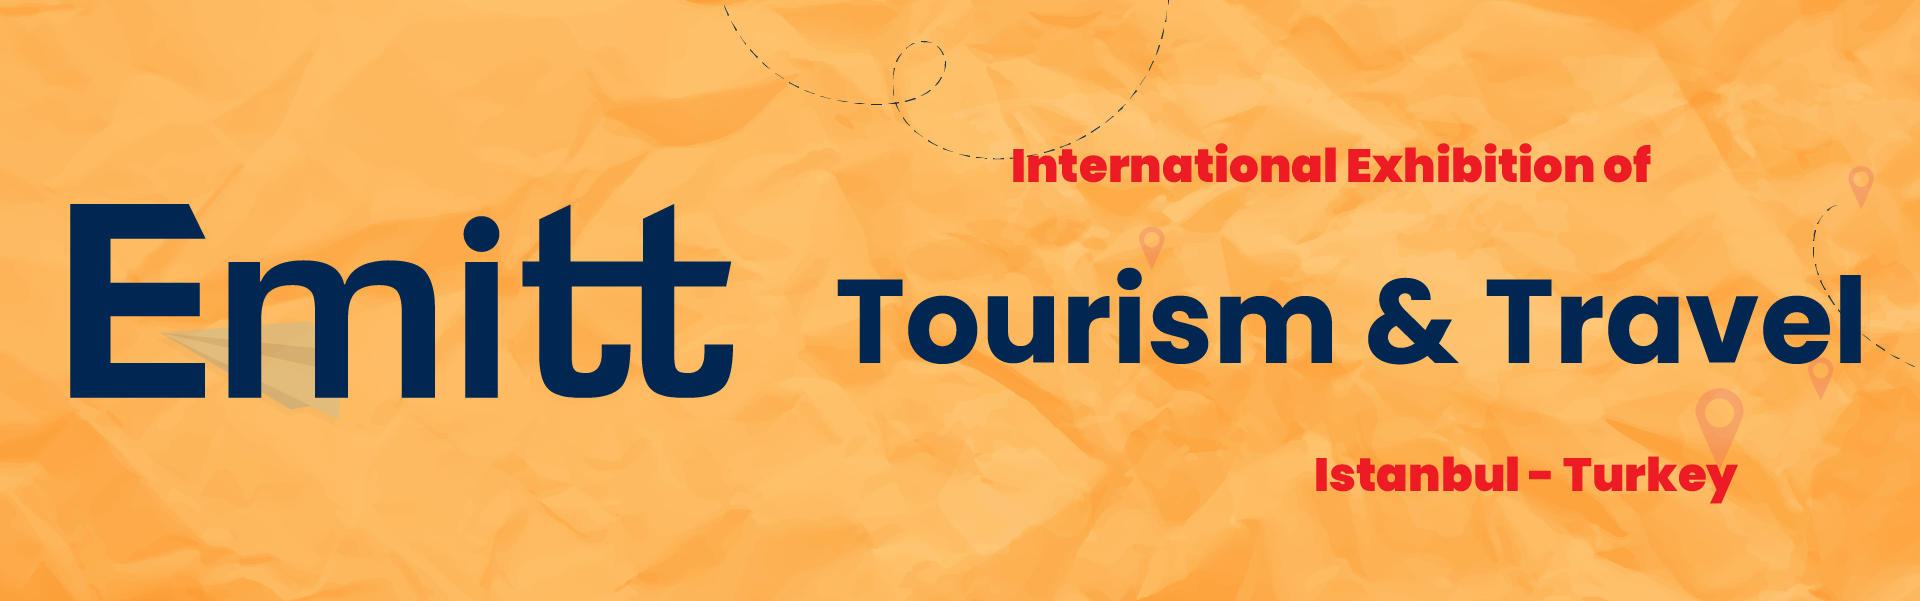 Tourism & Travel Exhibition Istanbul Turkey